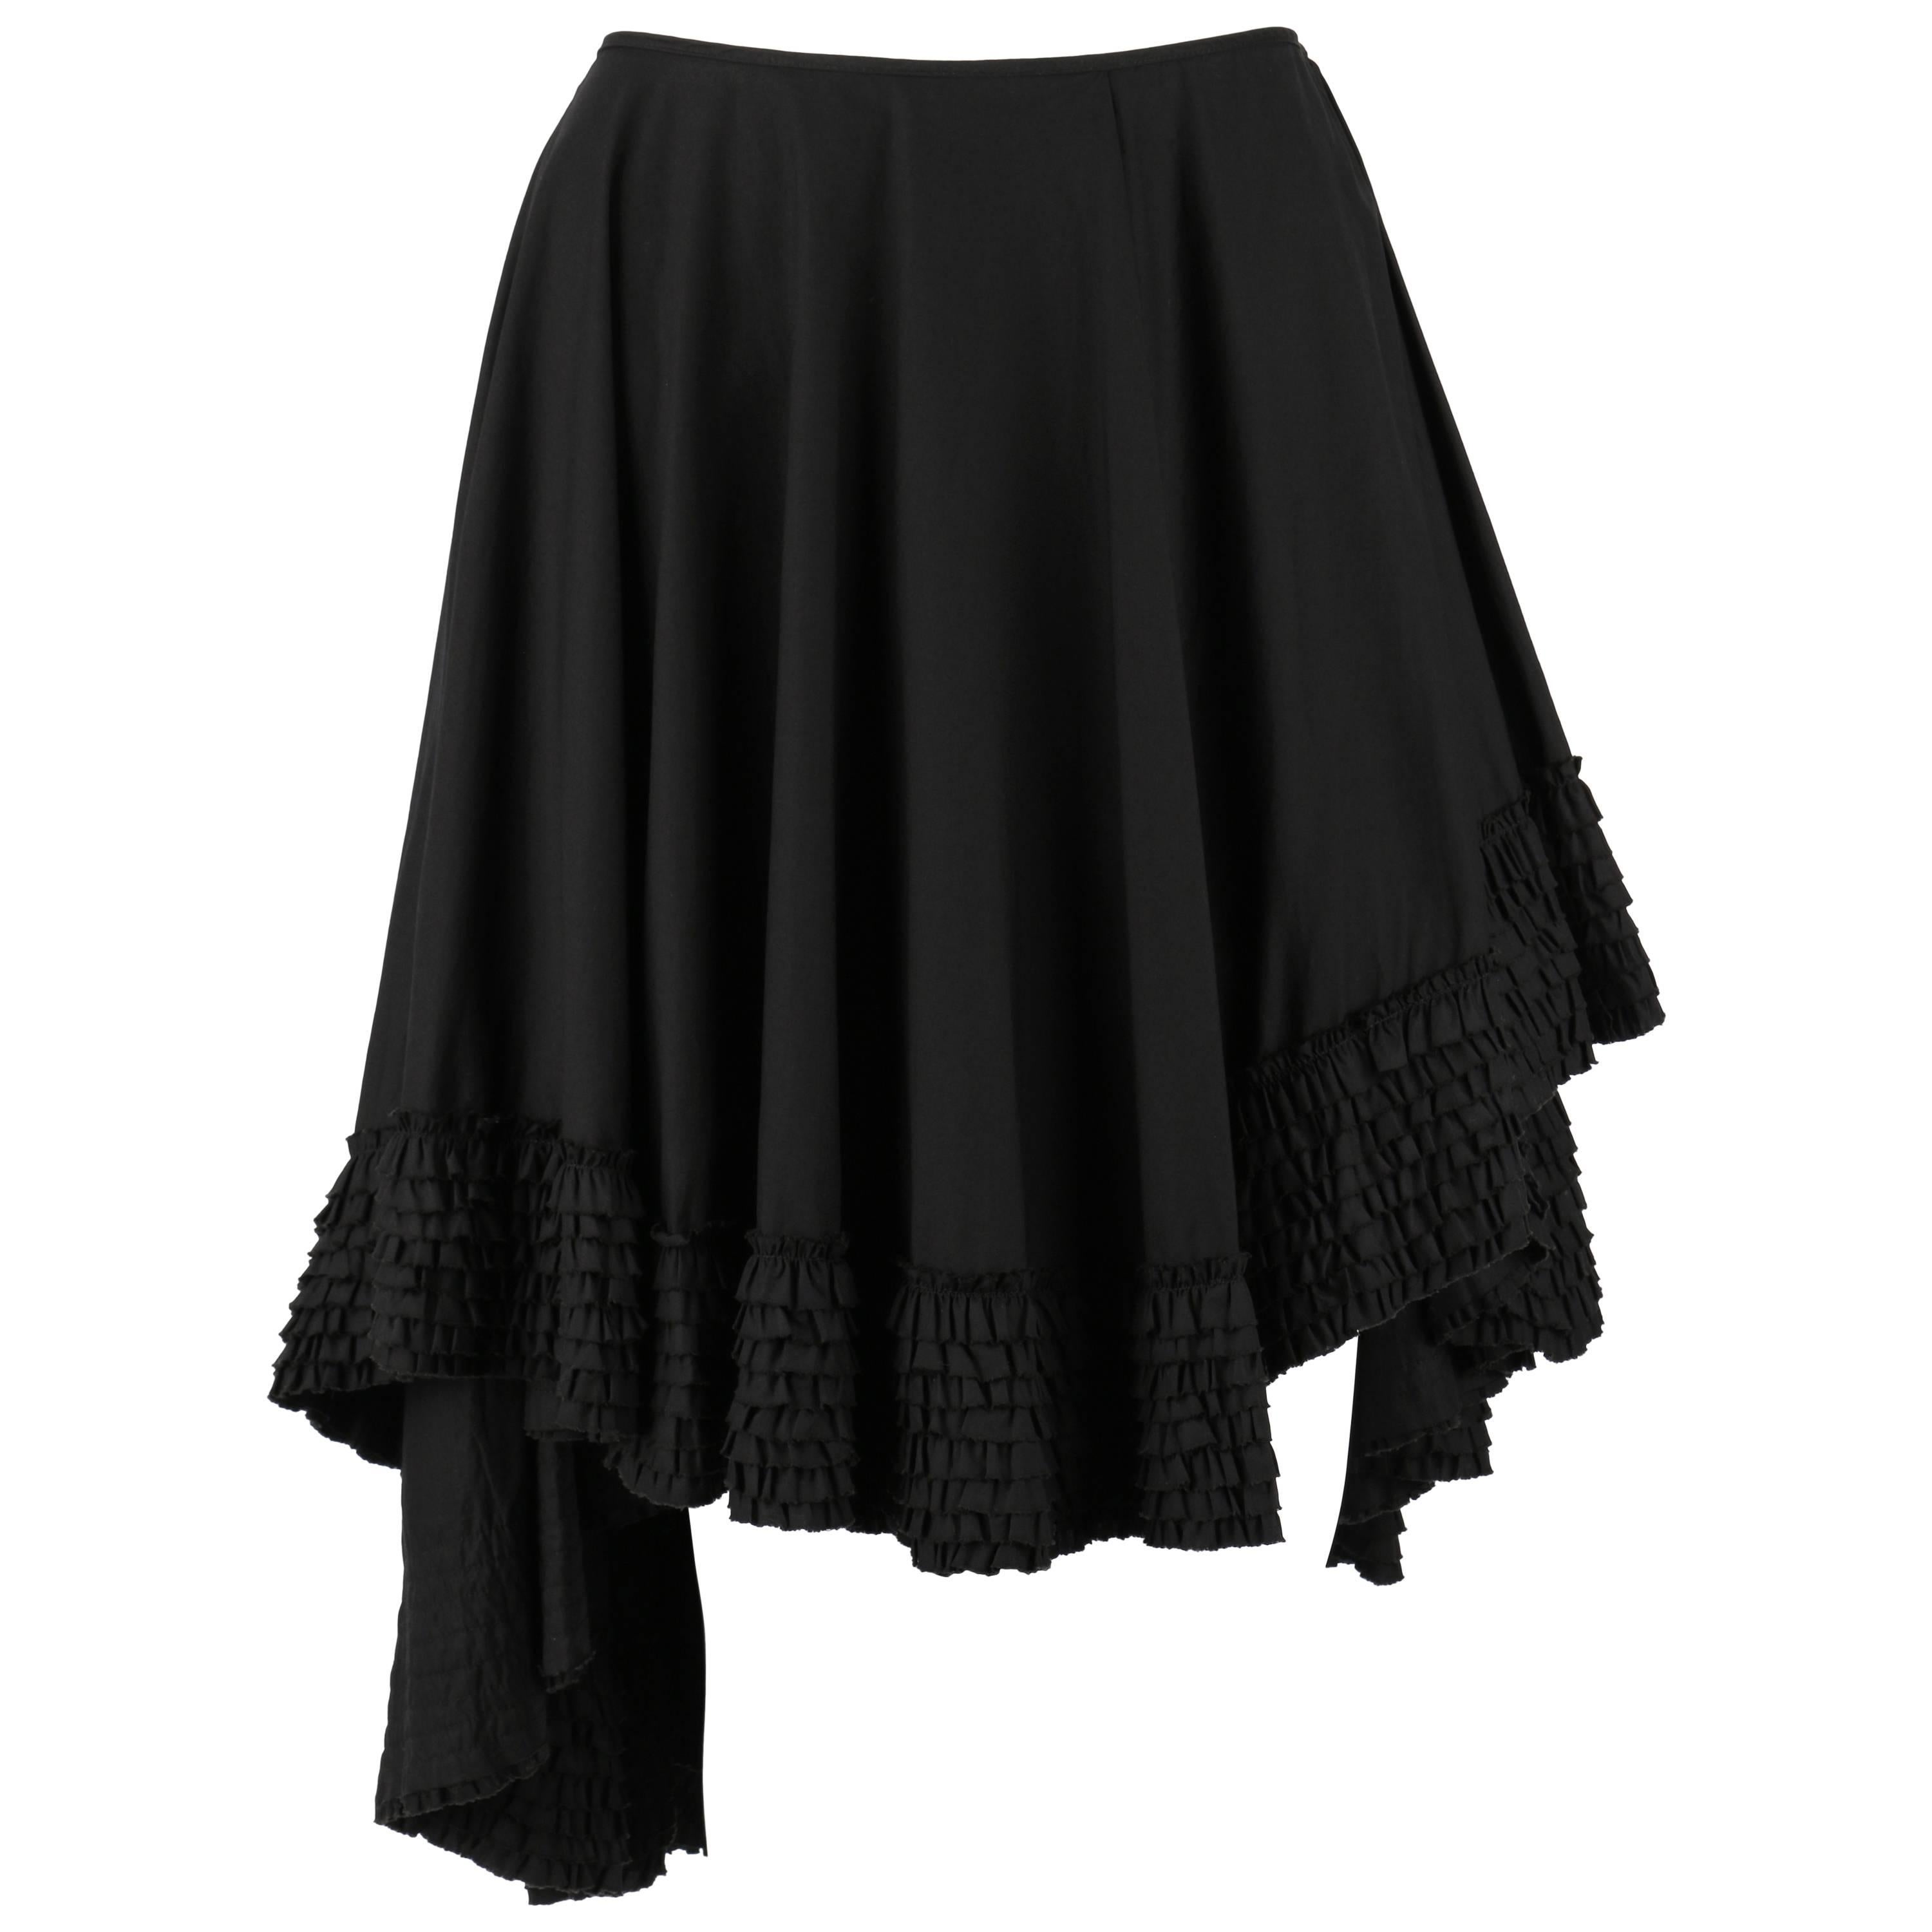 ALEXANDER McQUEEN S/S 2002 "Dance of the Twisted Bull" Black Asymmetrical Skirt For Sale